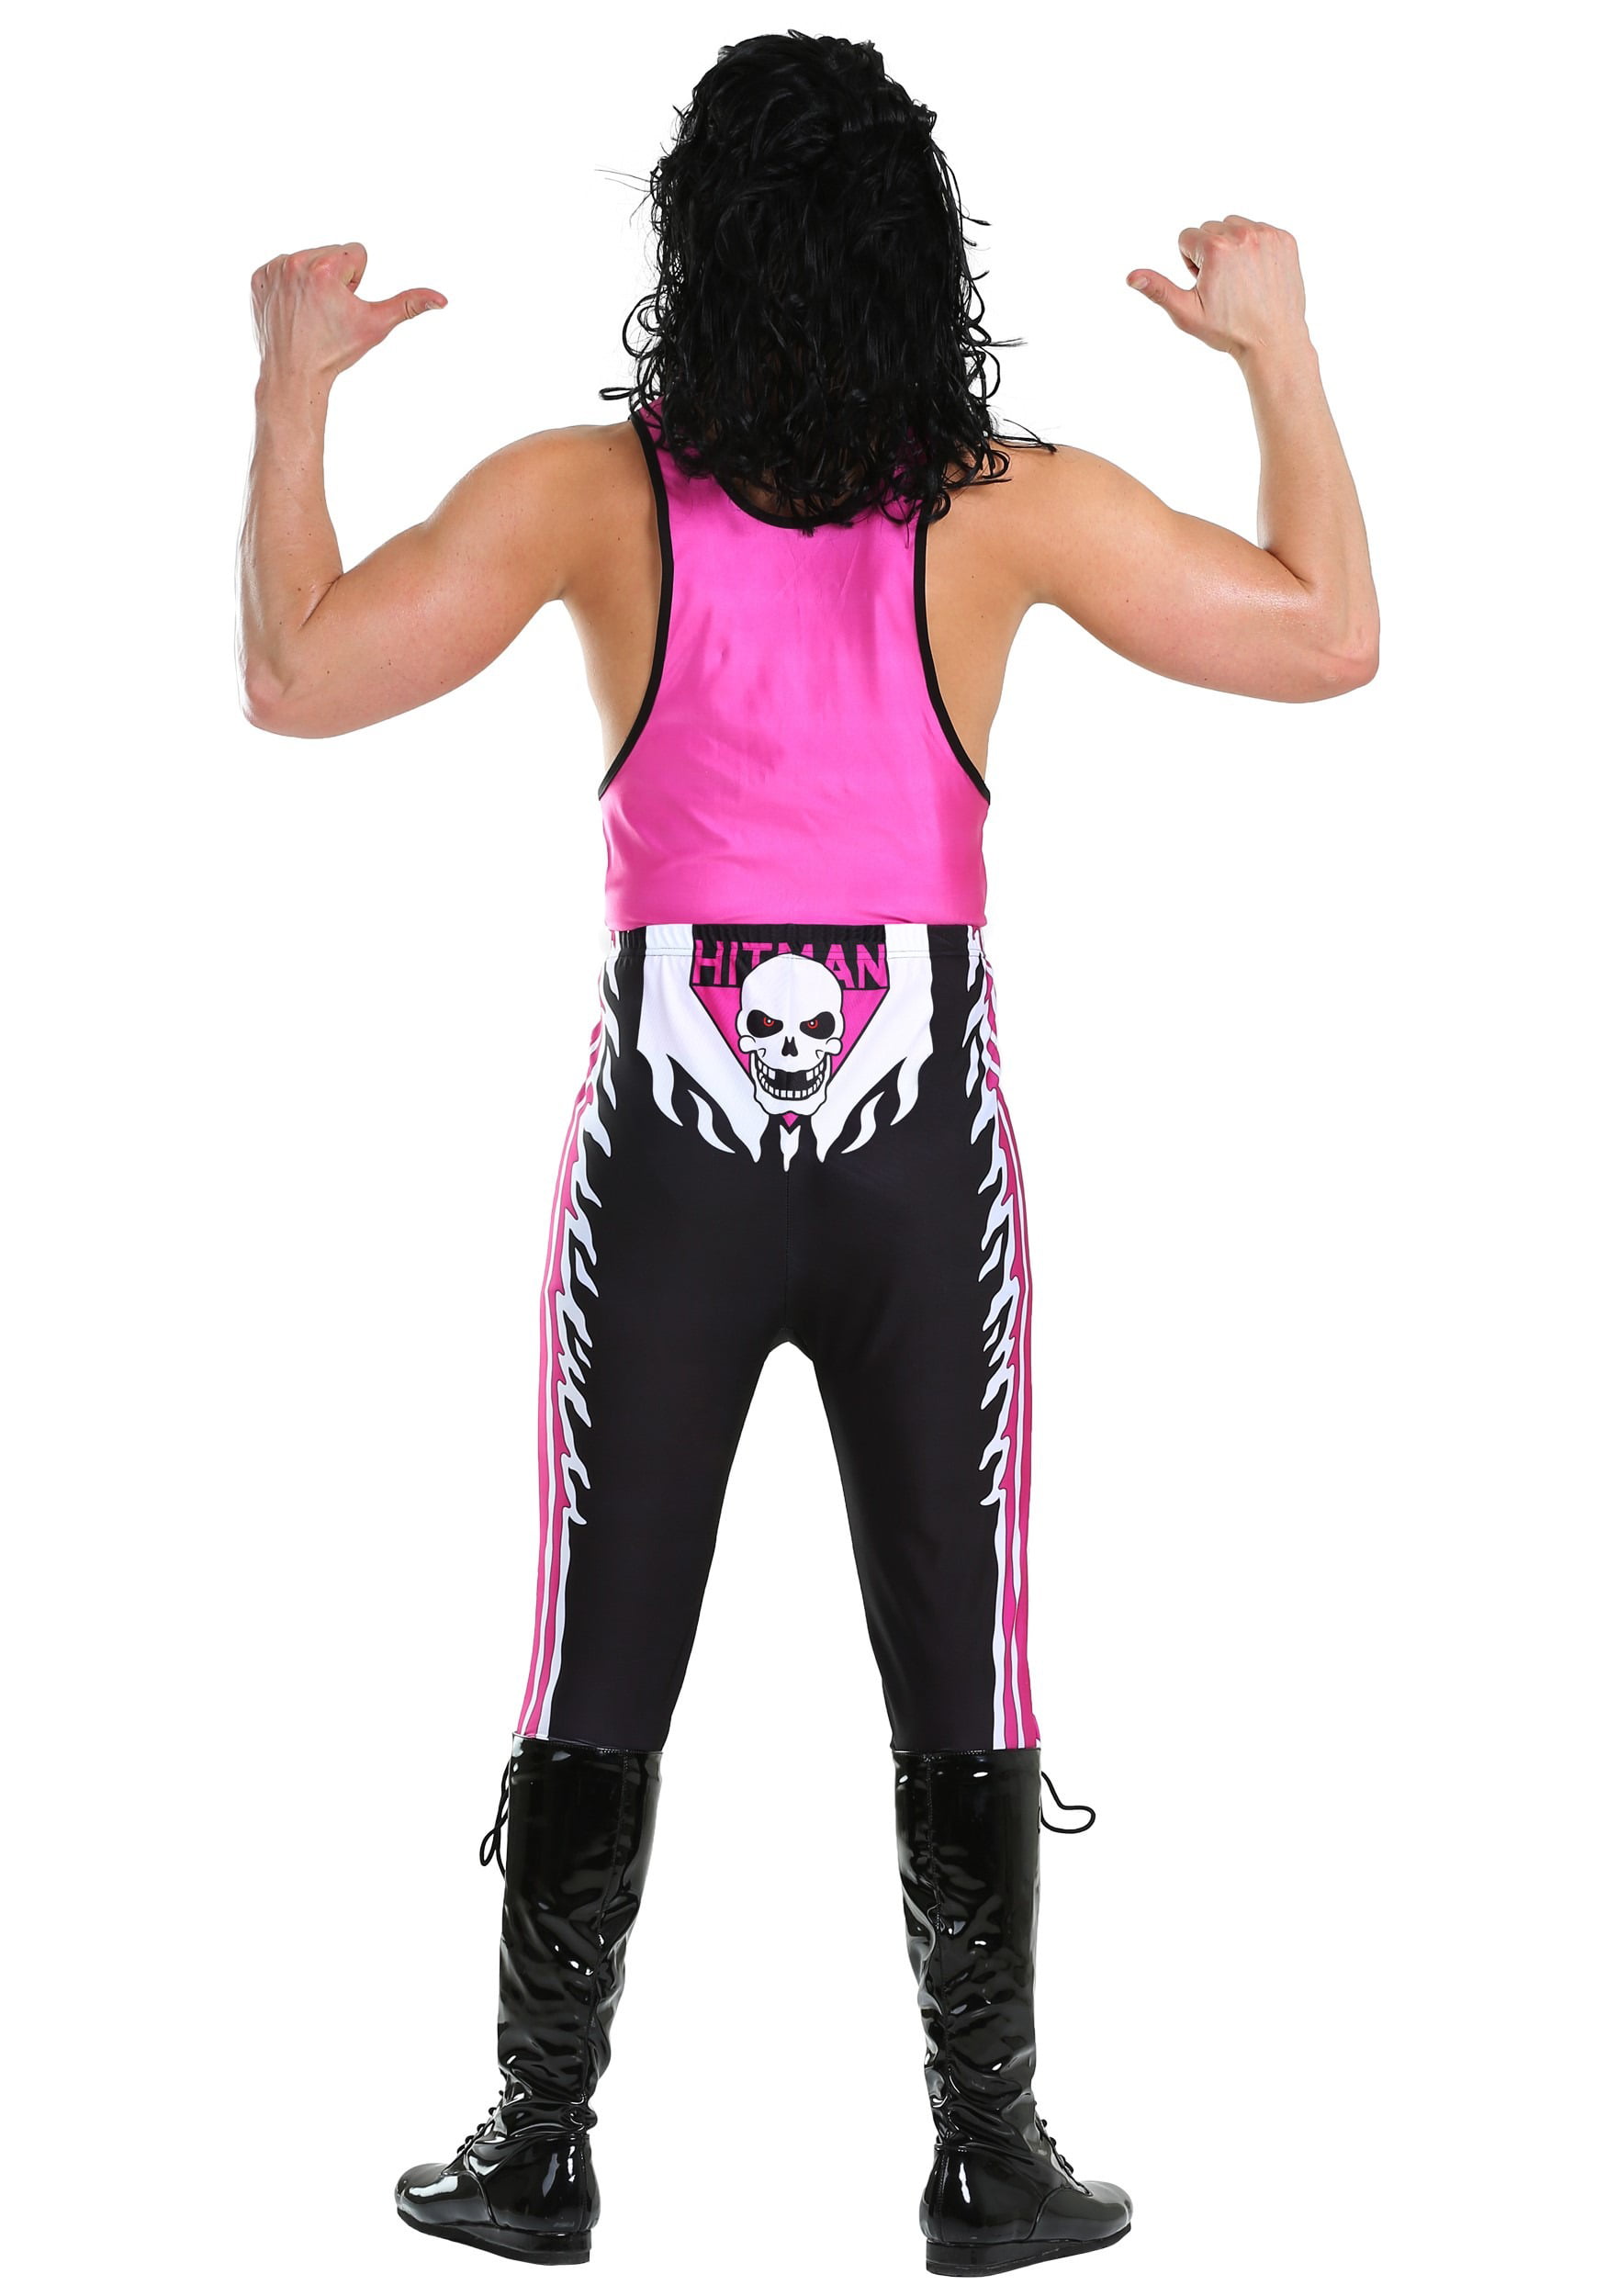 Buy WWE Bret Hart Men's Costume at Walmart.com.